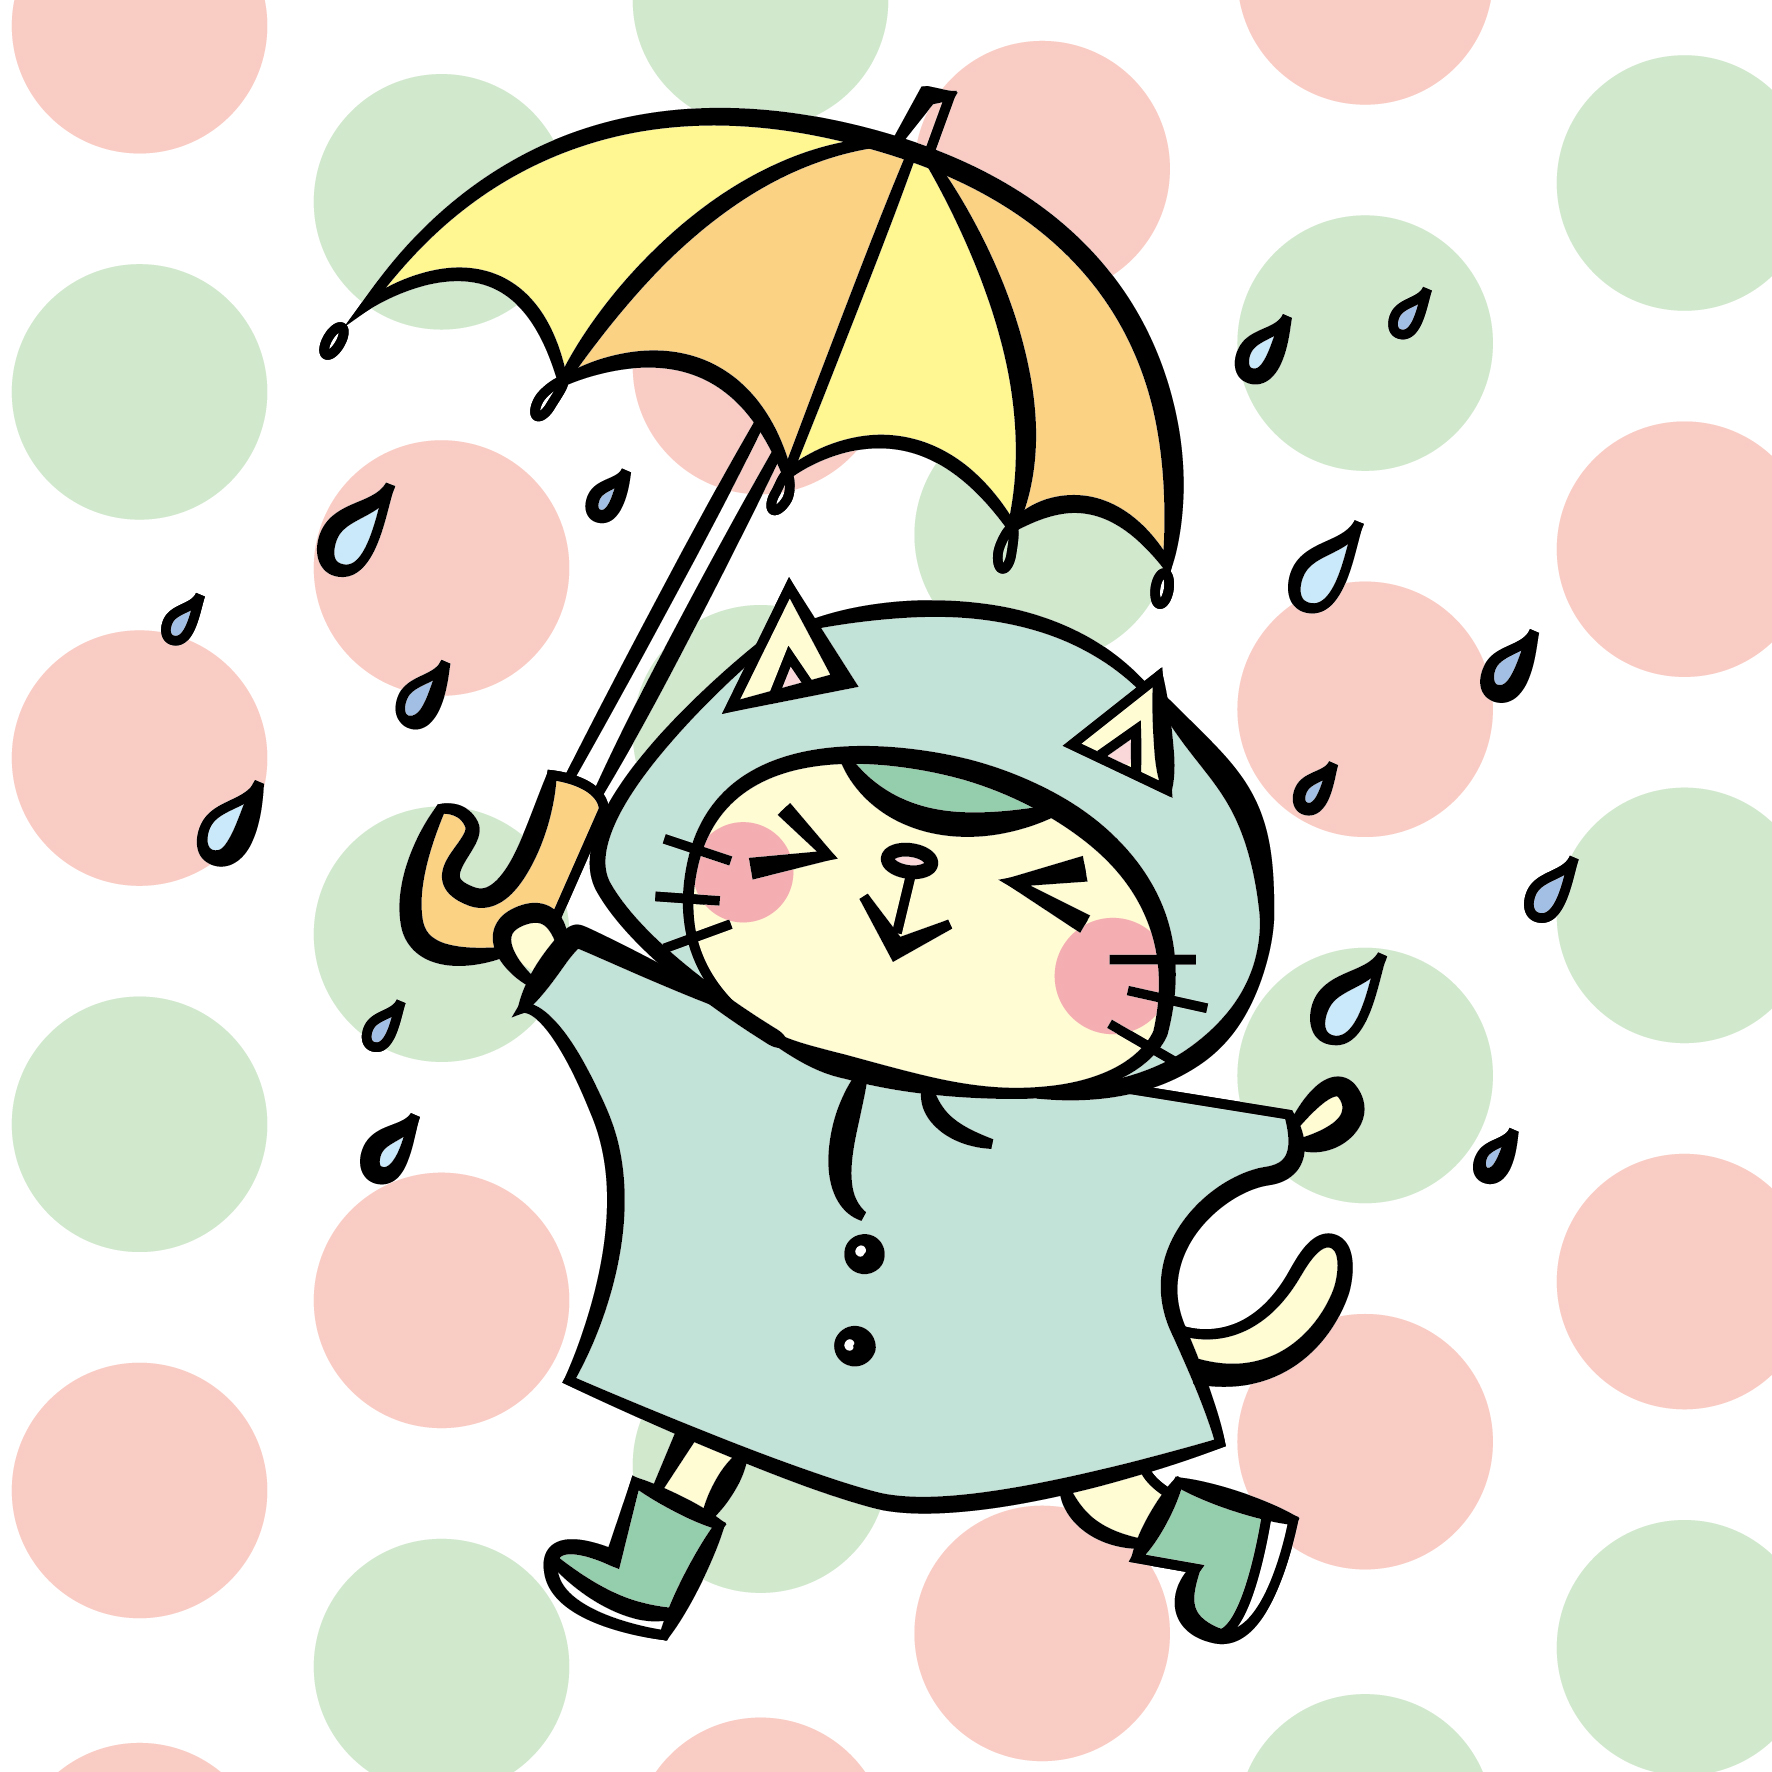 Rainny day